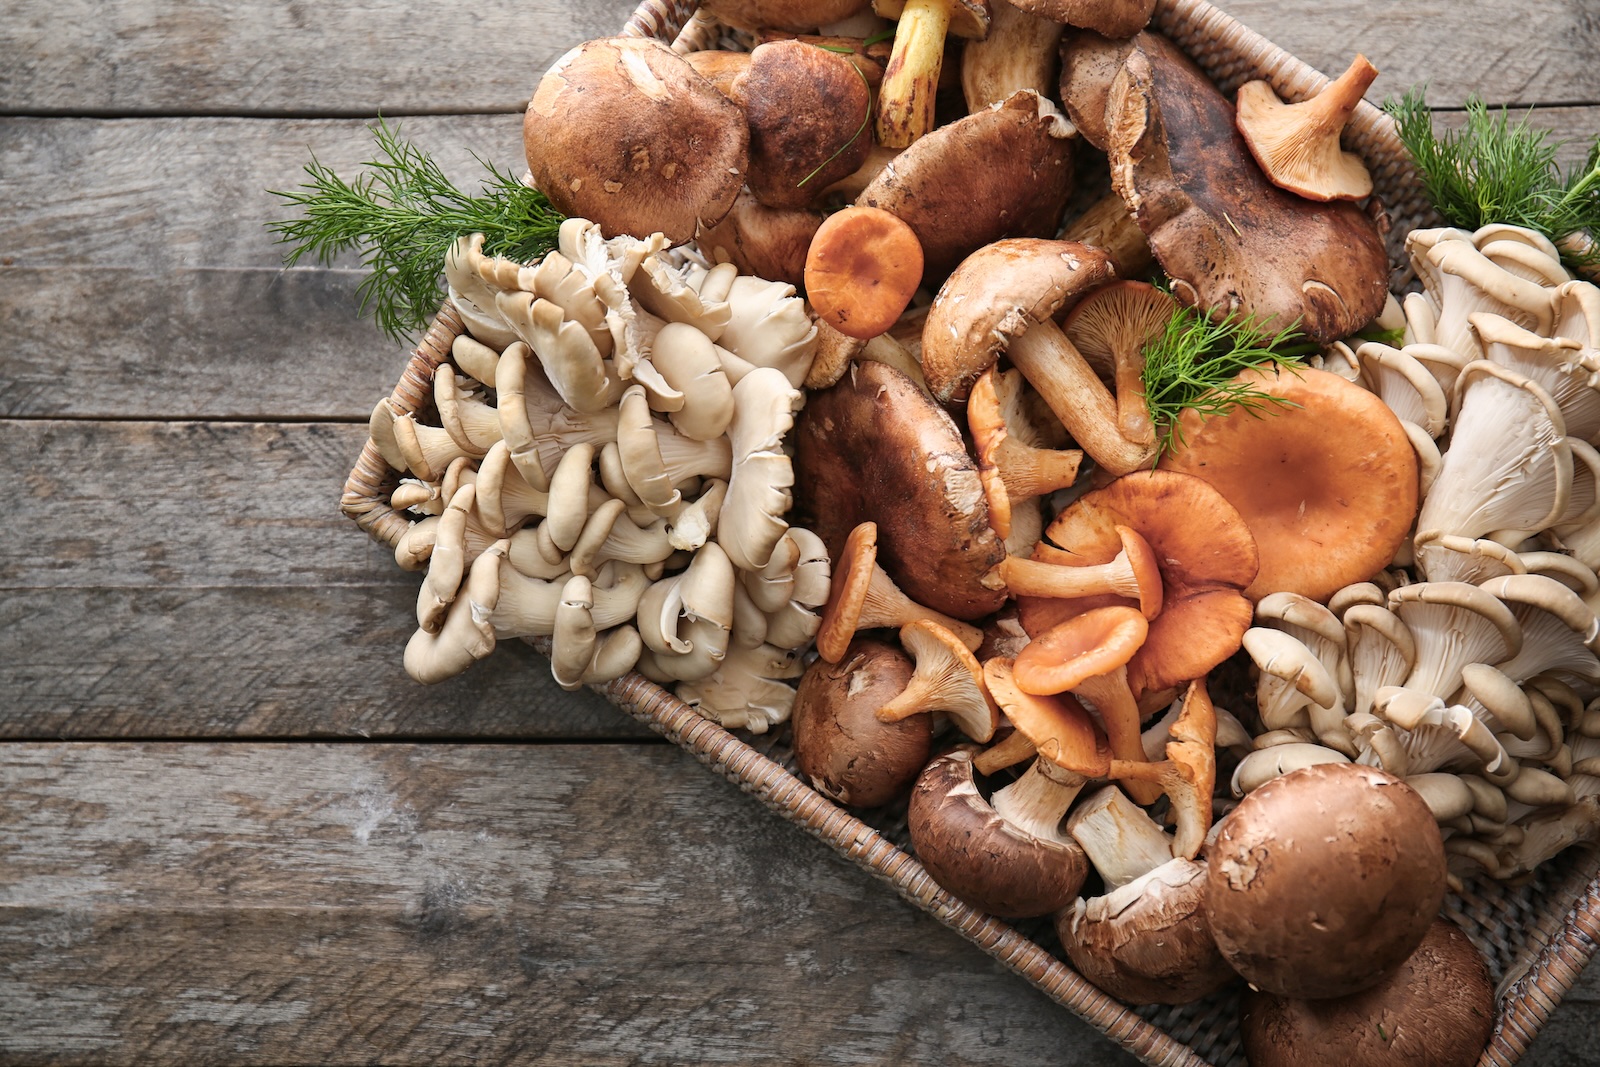 A variety of raw mushrooms. Image credit: © Belchonok | Depositphotos